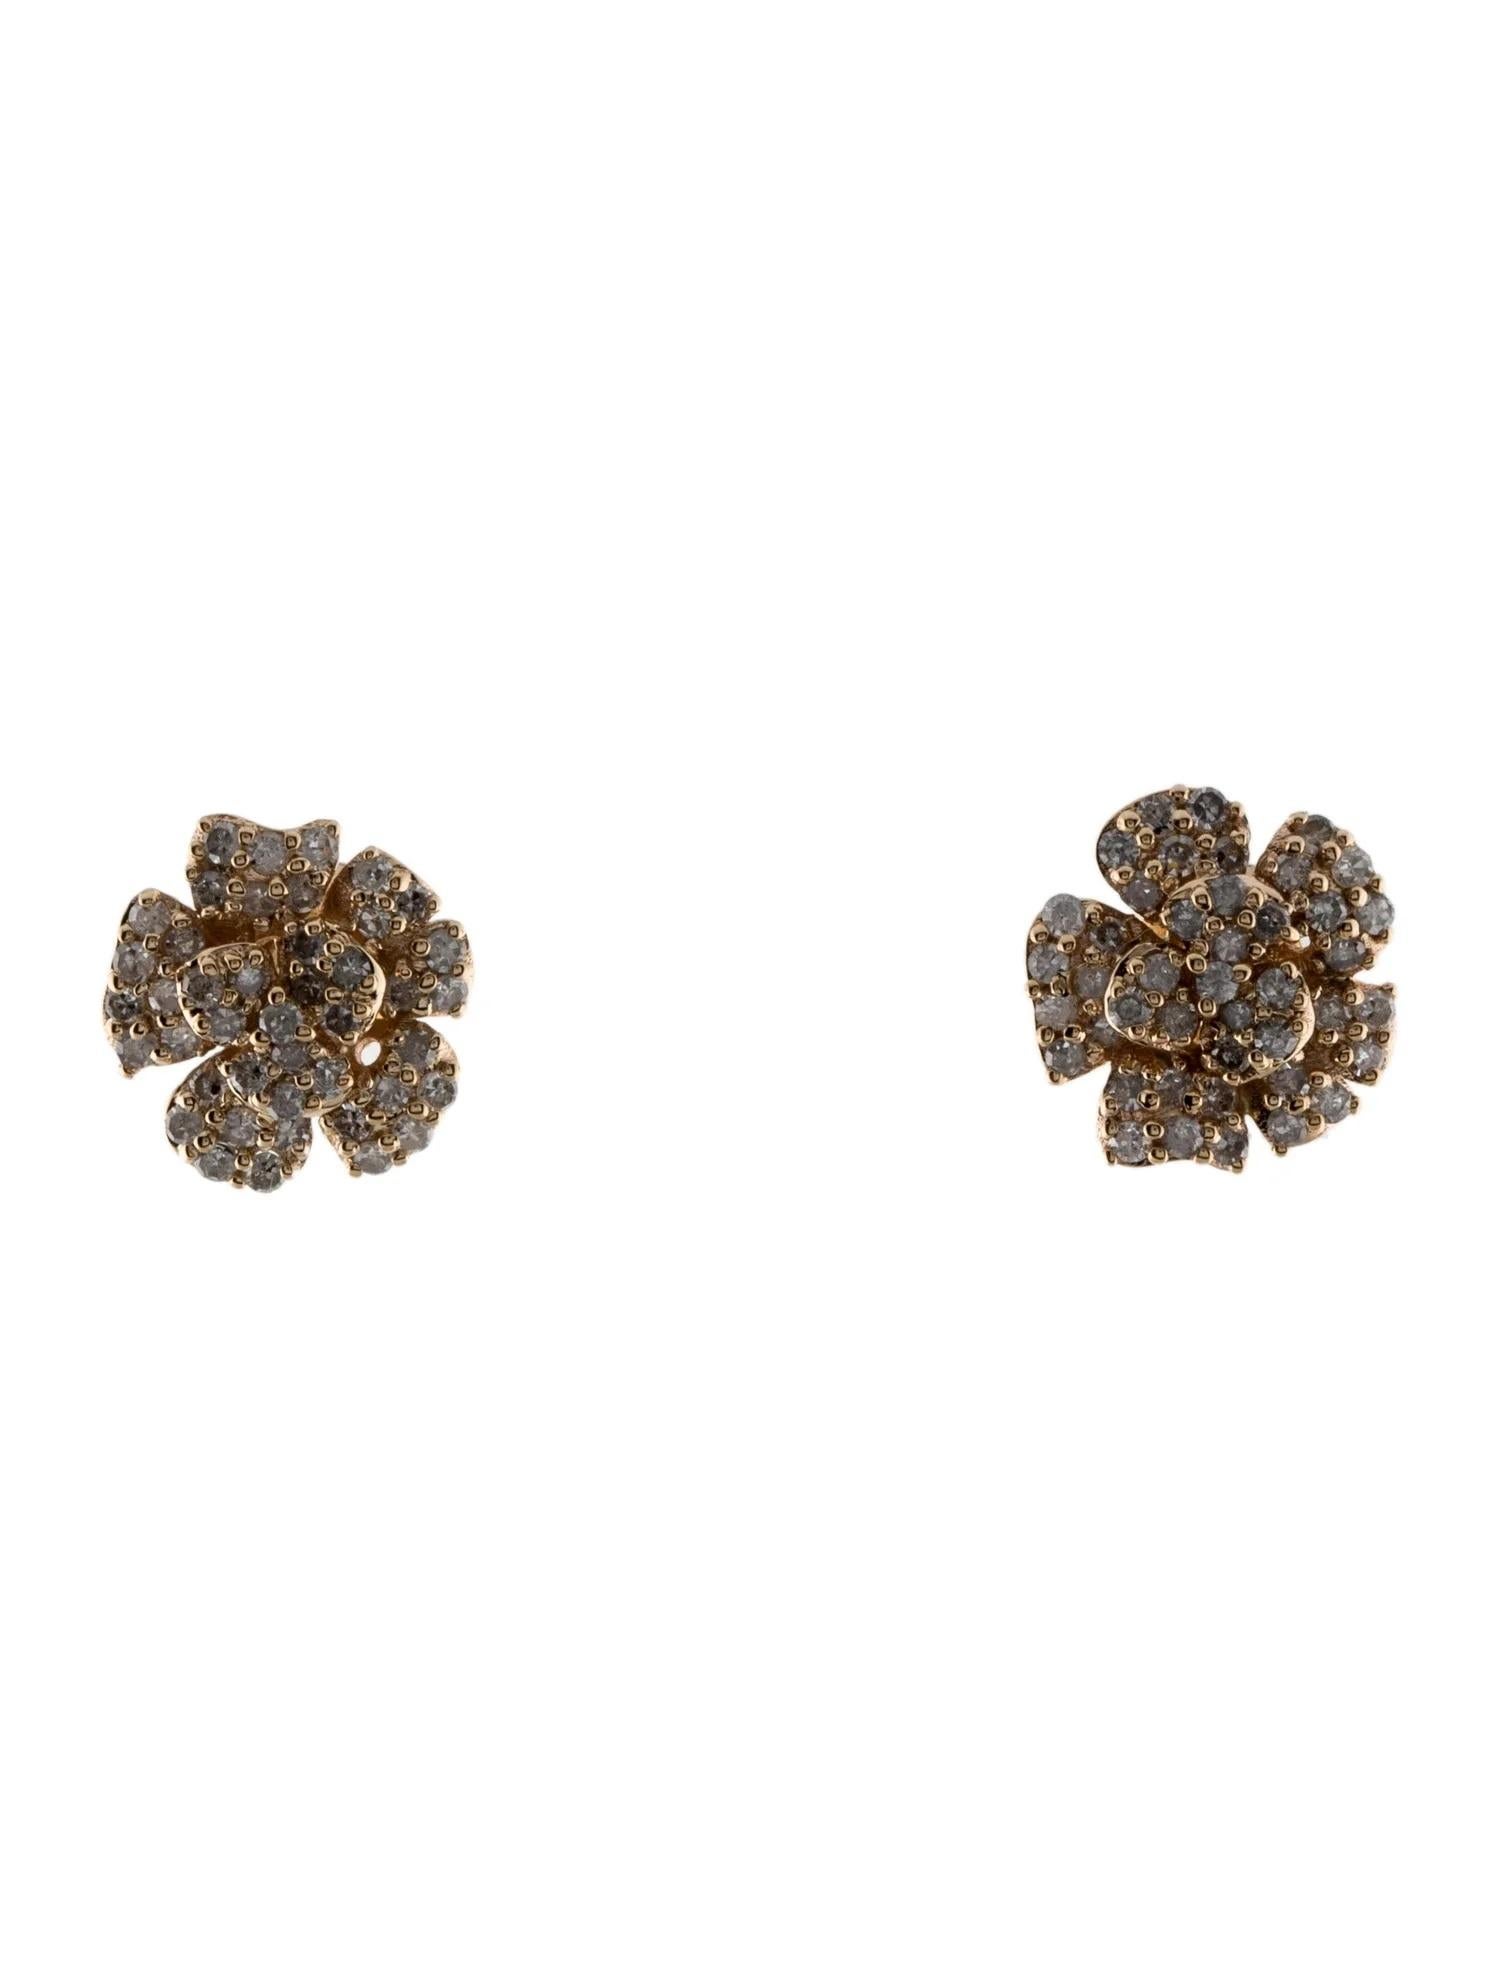 Single Cut 14K Diamond Stud Earrings - Classic Elegance in Yellow Gold, 0.63 Carats For Sale